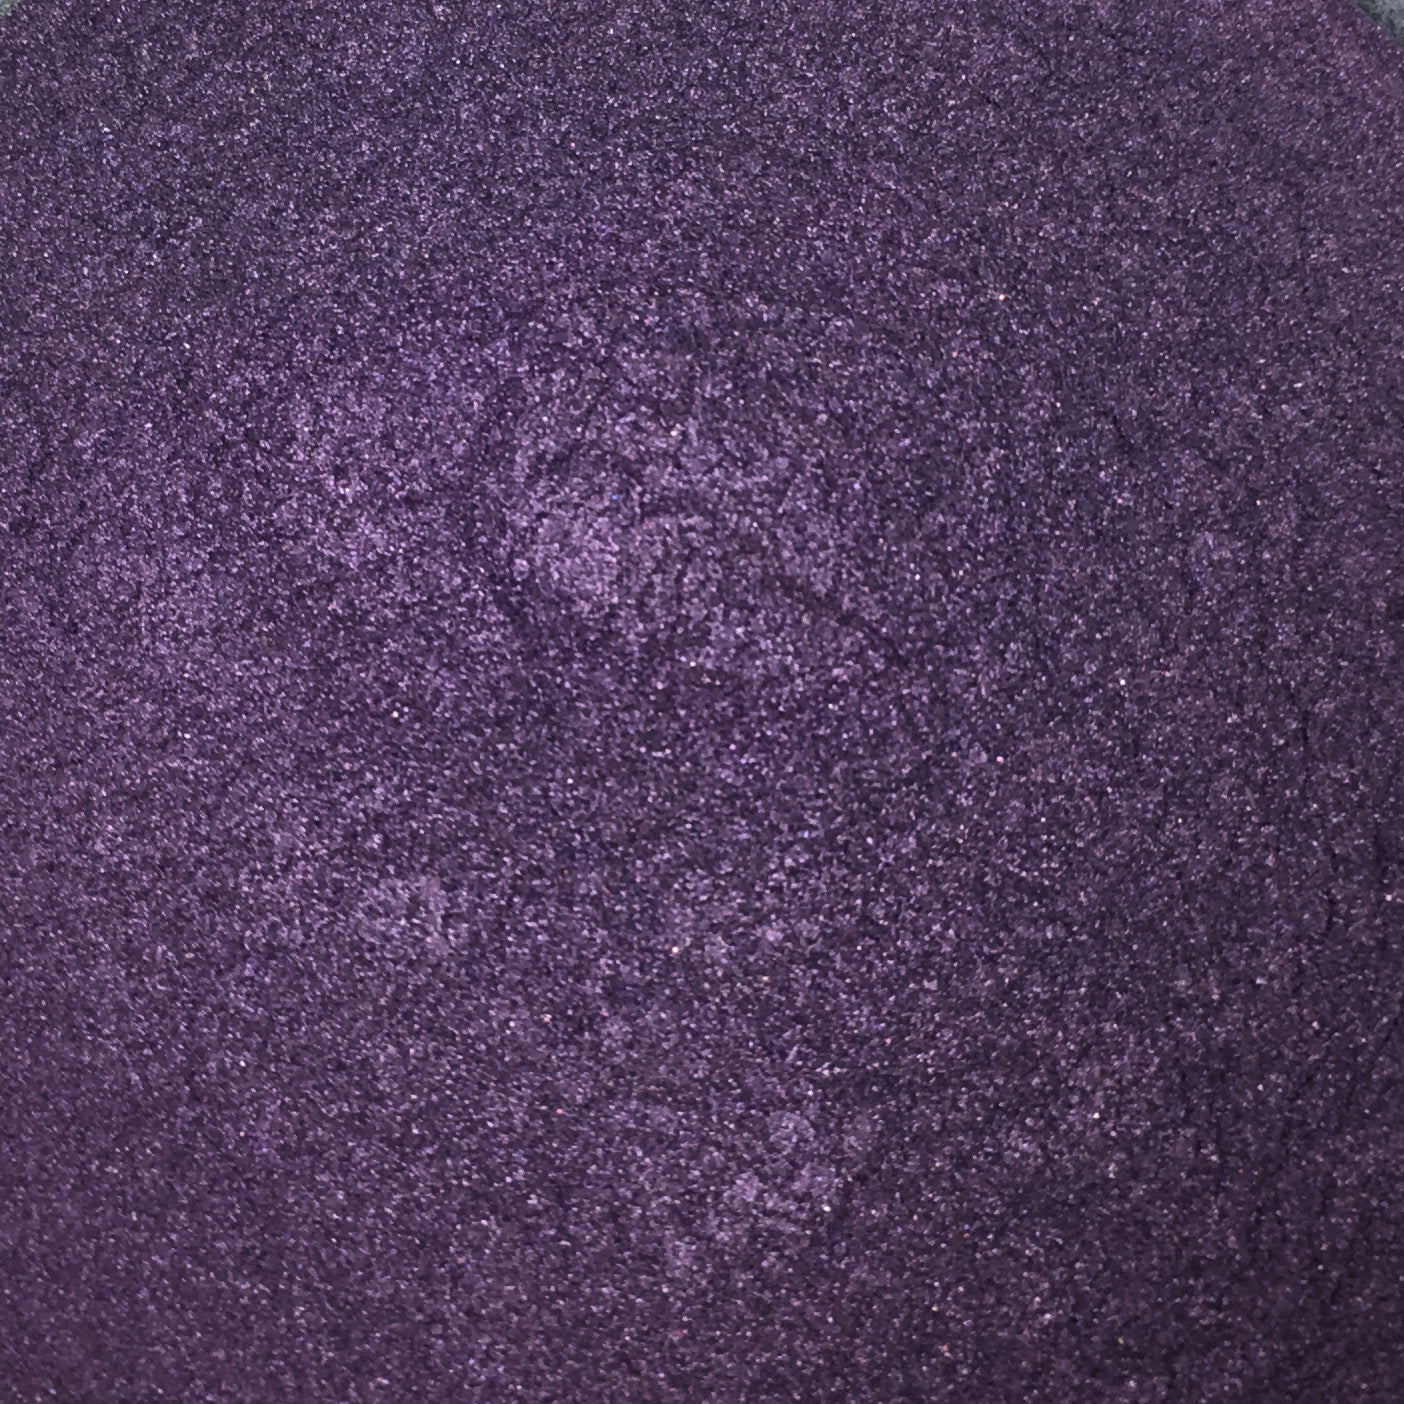 Ursula - Pearl Mica Pigment Powders - Purple, mica- Lumin's Workshop